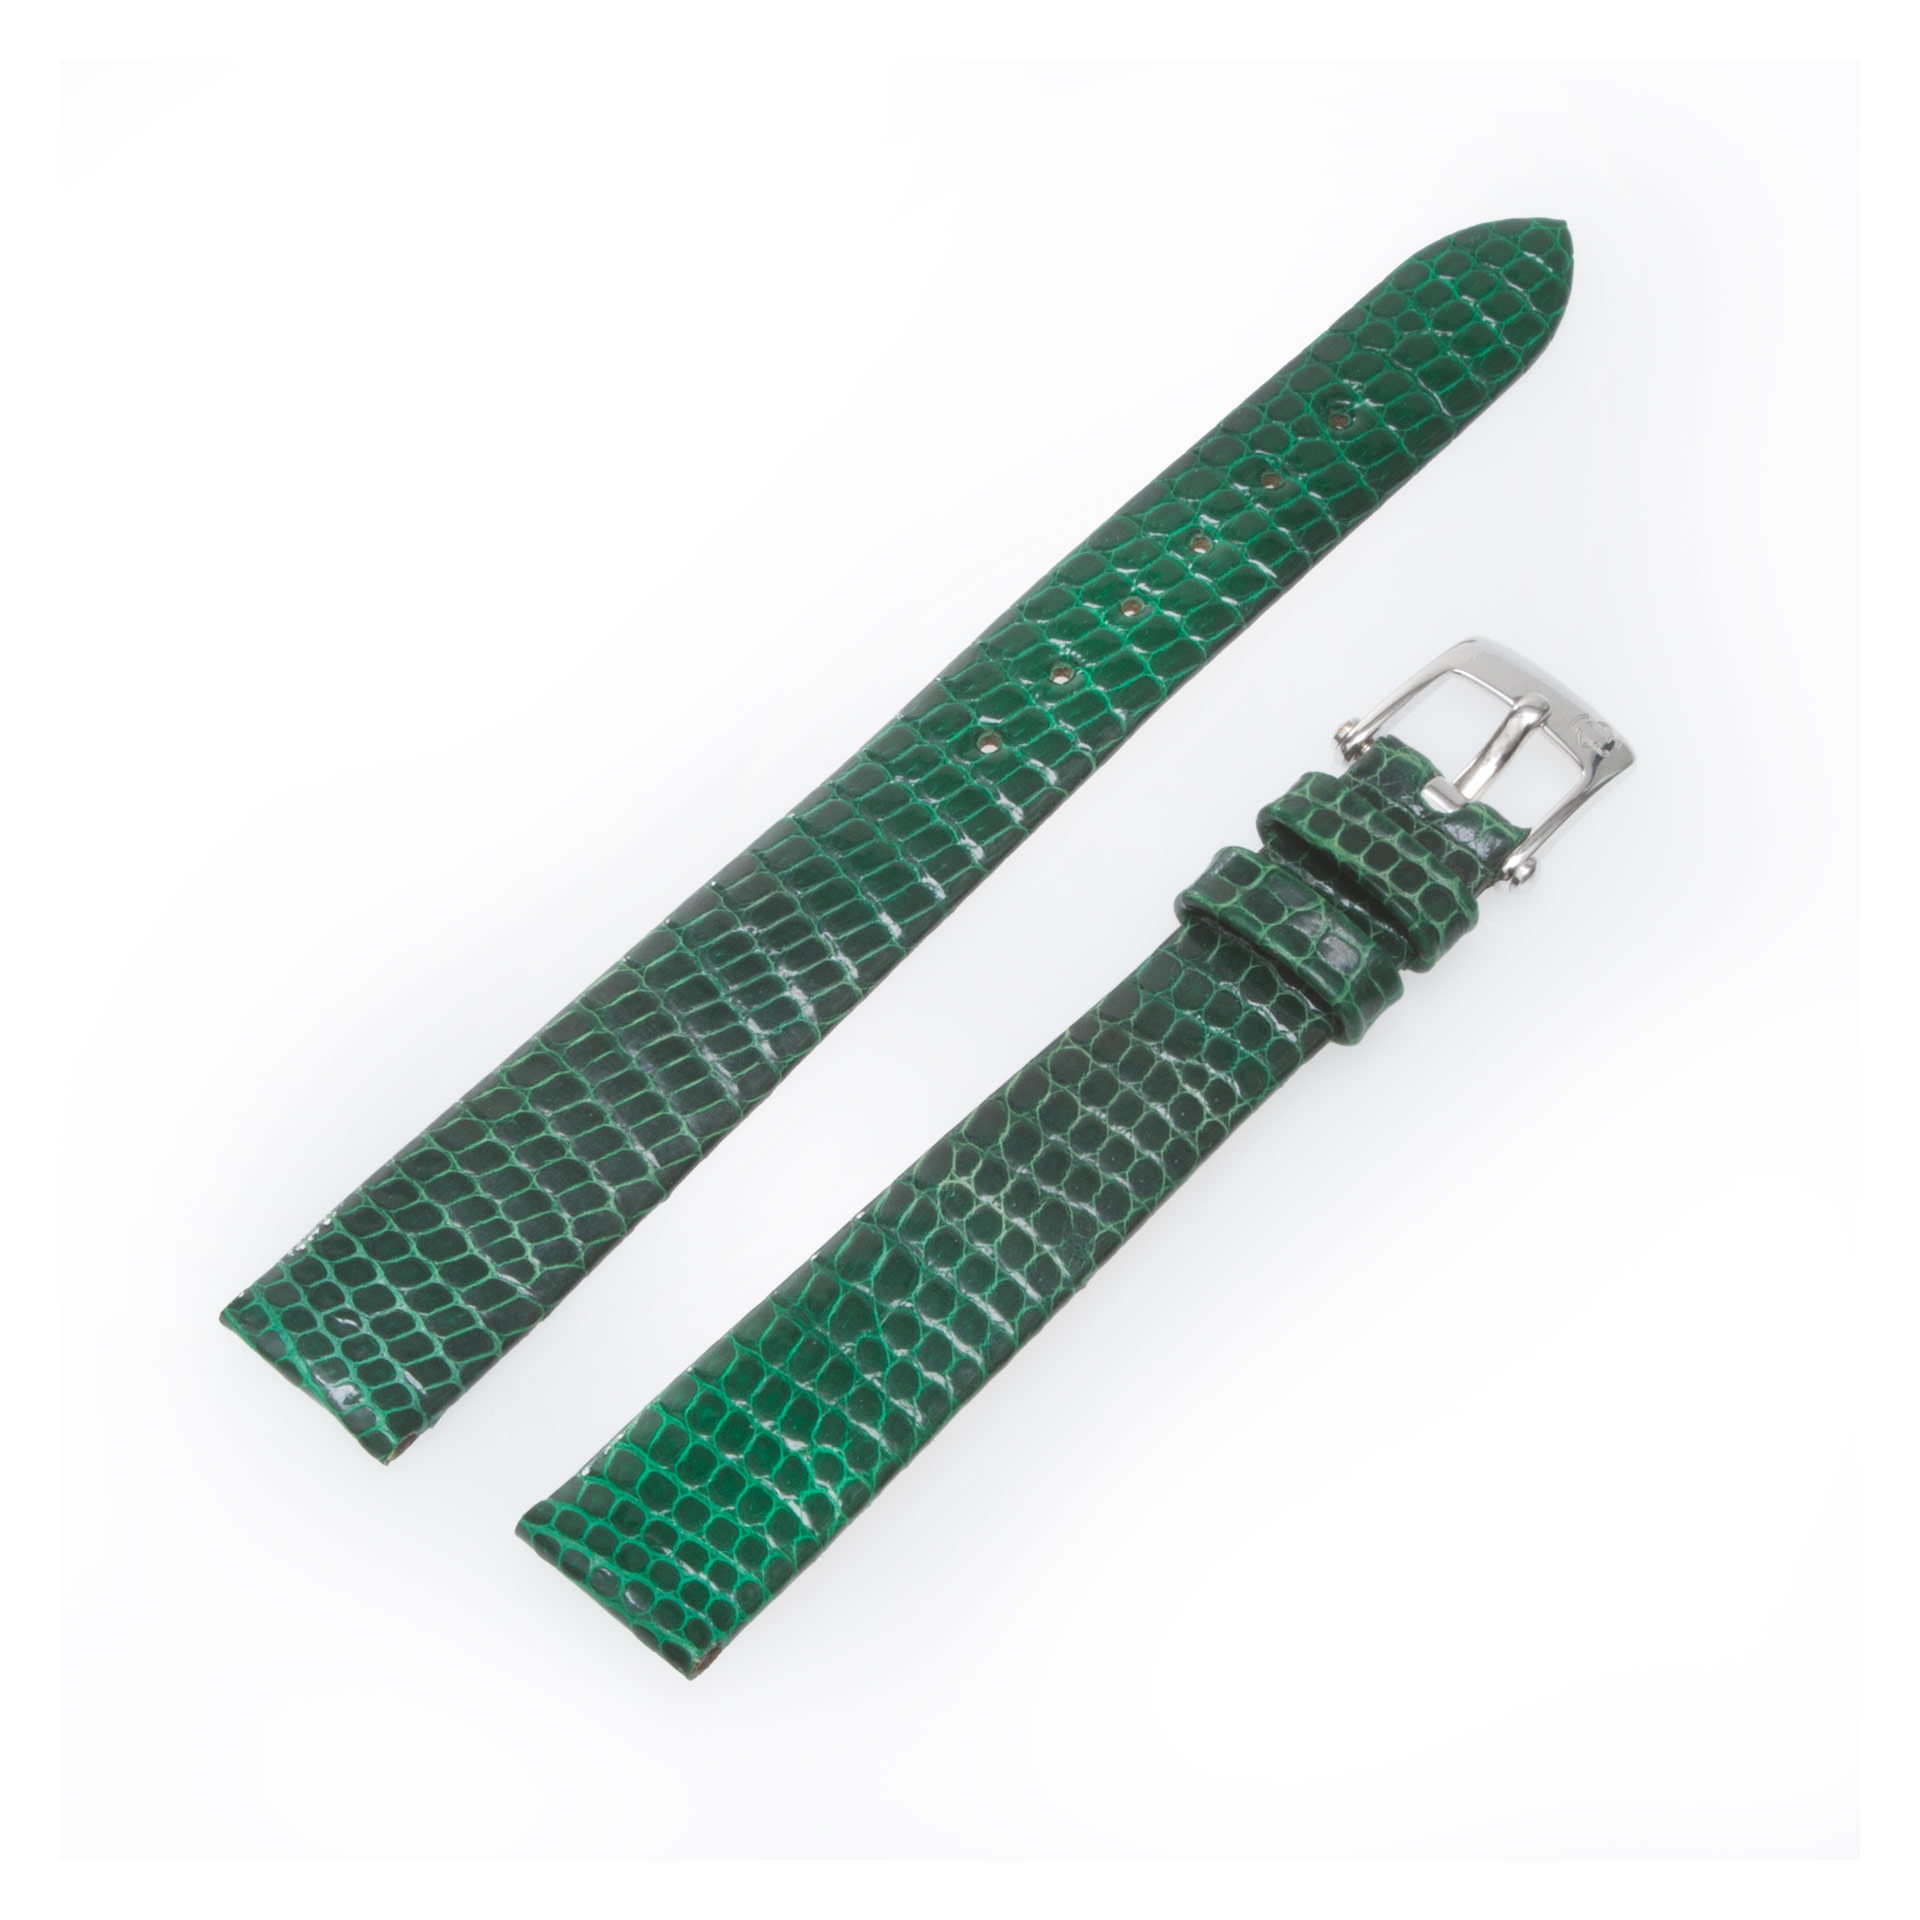 Van Cleef & Arpels green lizard strap with stainless steel tang buckle 12mm x 10mm